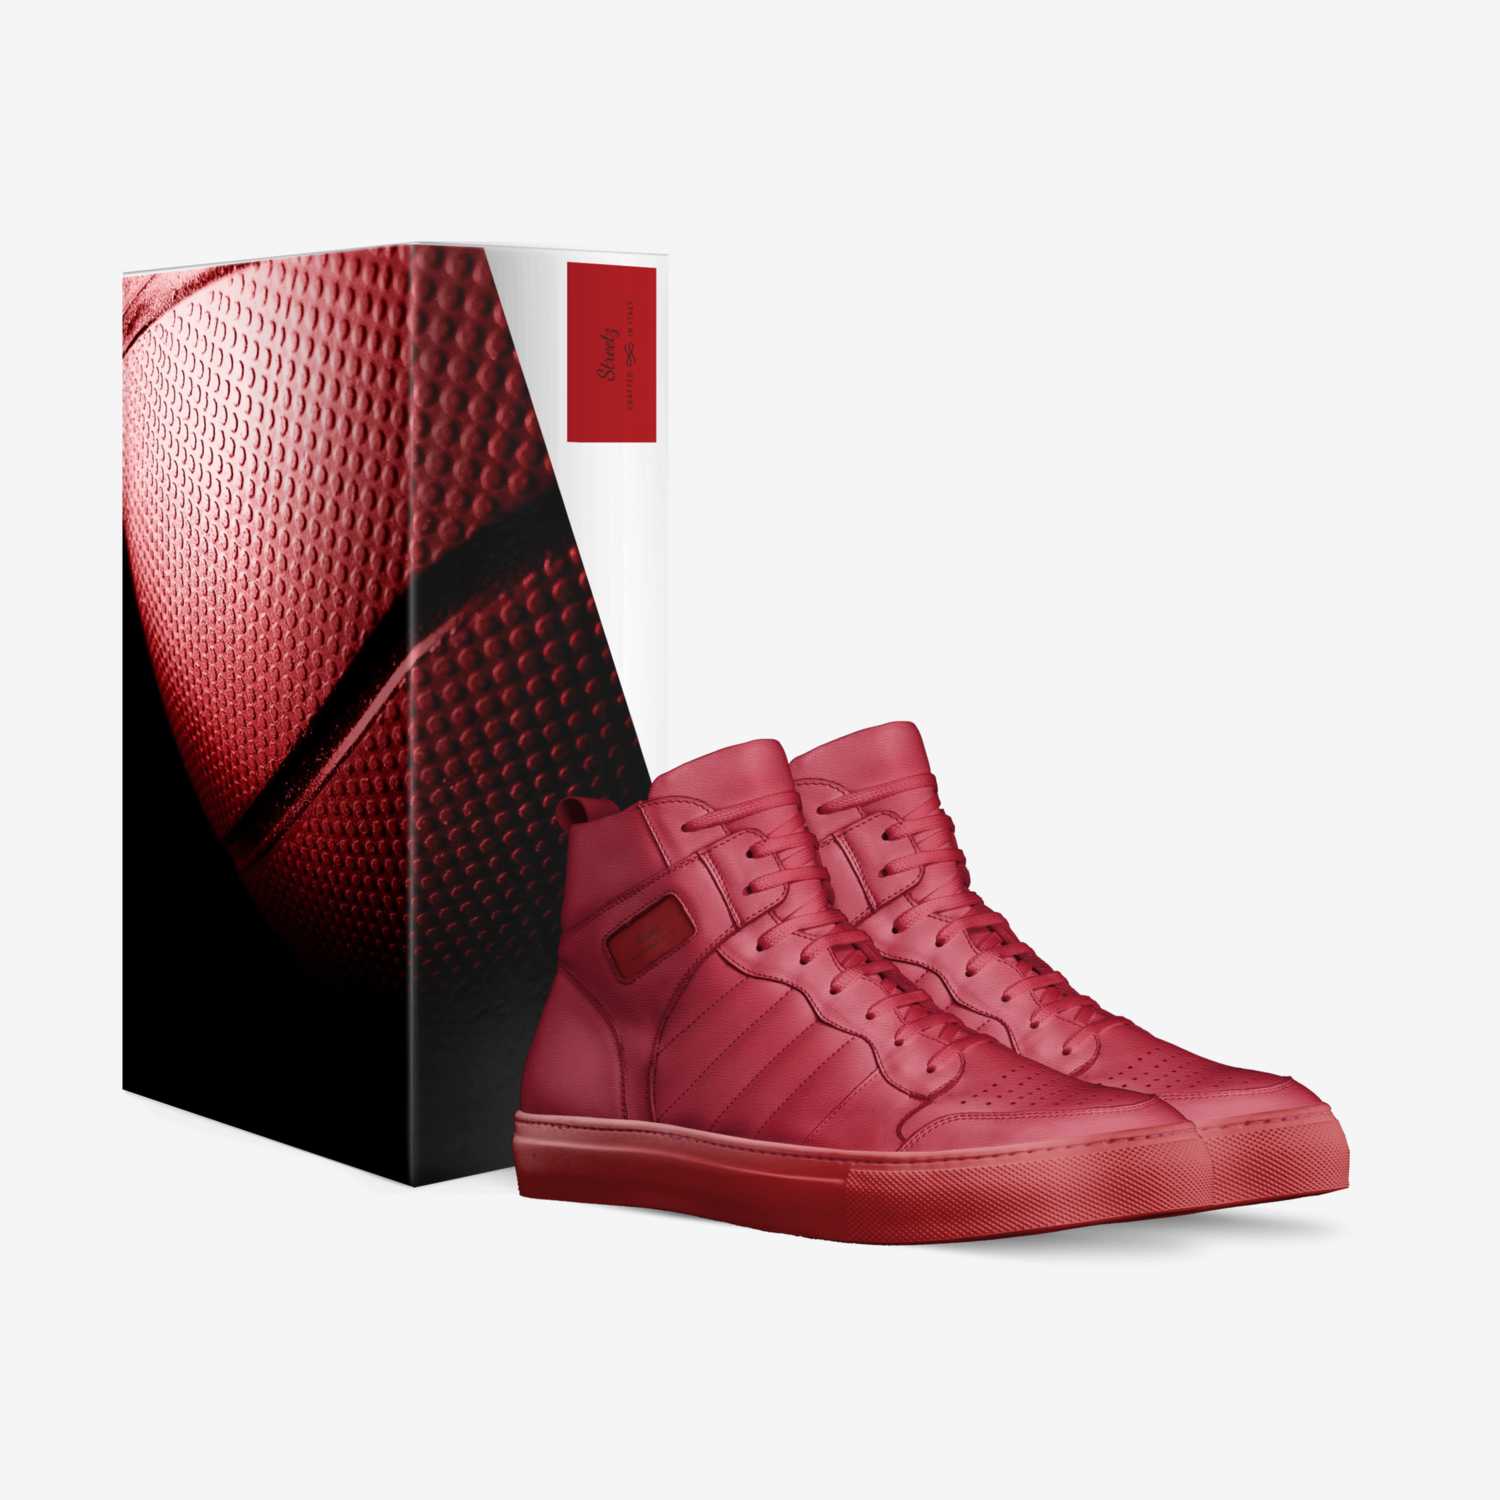 Streetz custom made in Italy shoes by Natasha Robinson | Box view